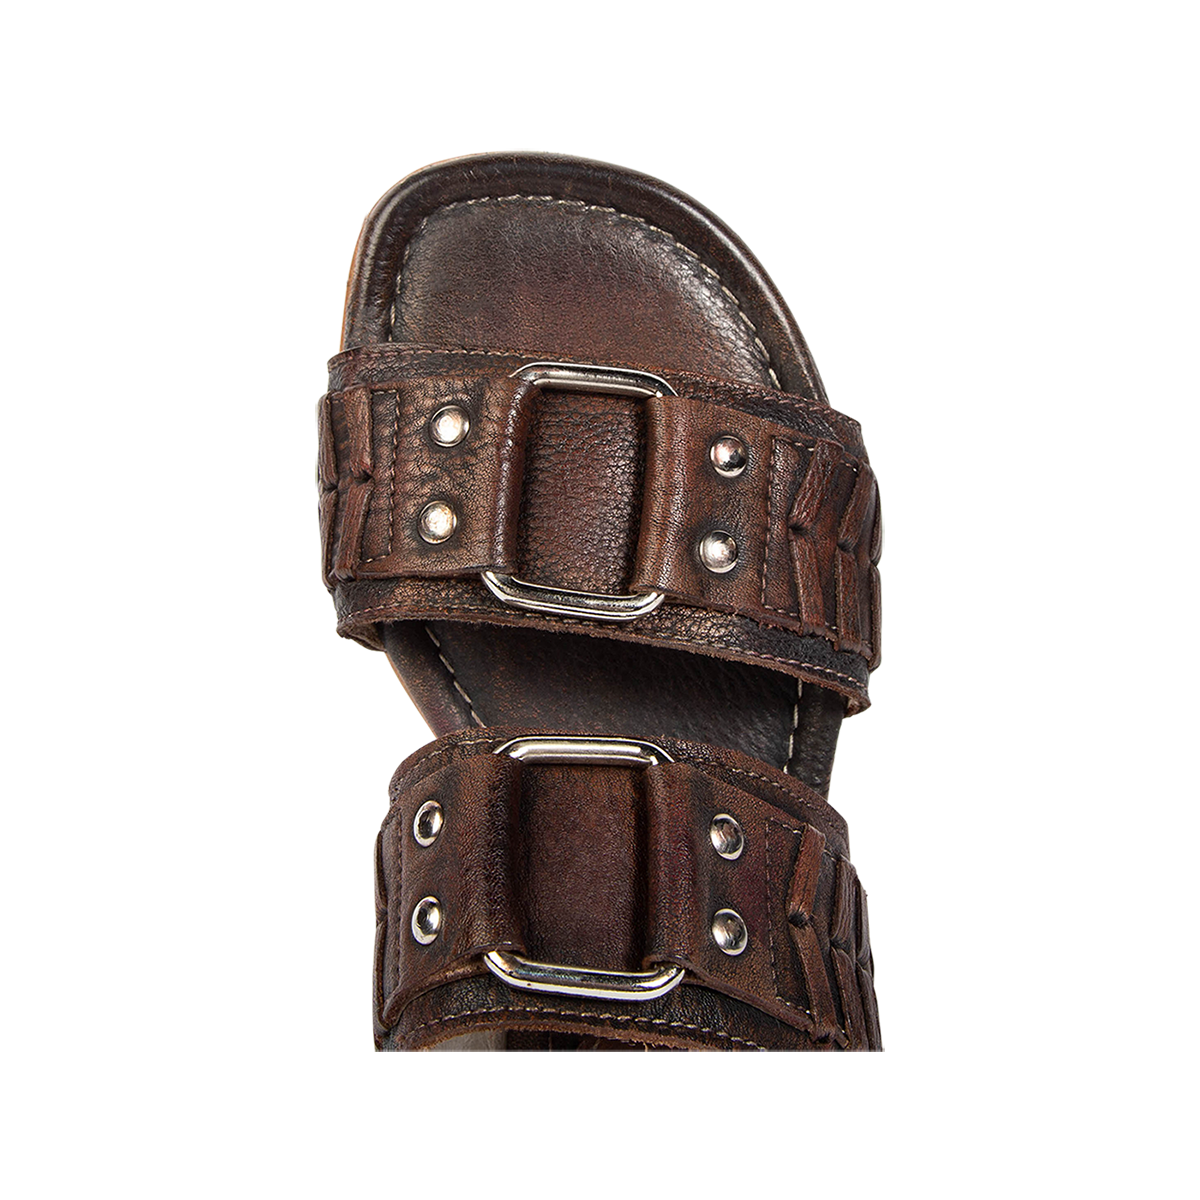 Top view showing metal embellished double foot straps on FREEBIRD women's Sage black low heeled slip-on sandal